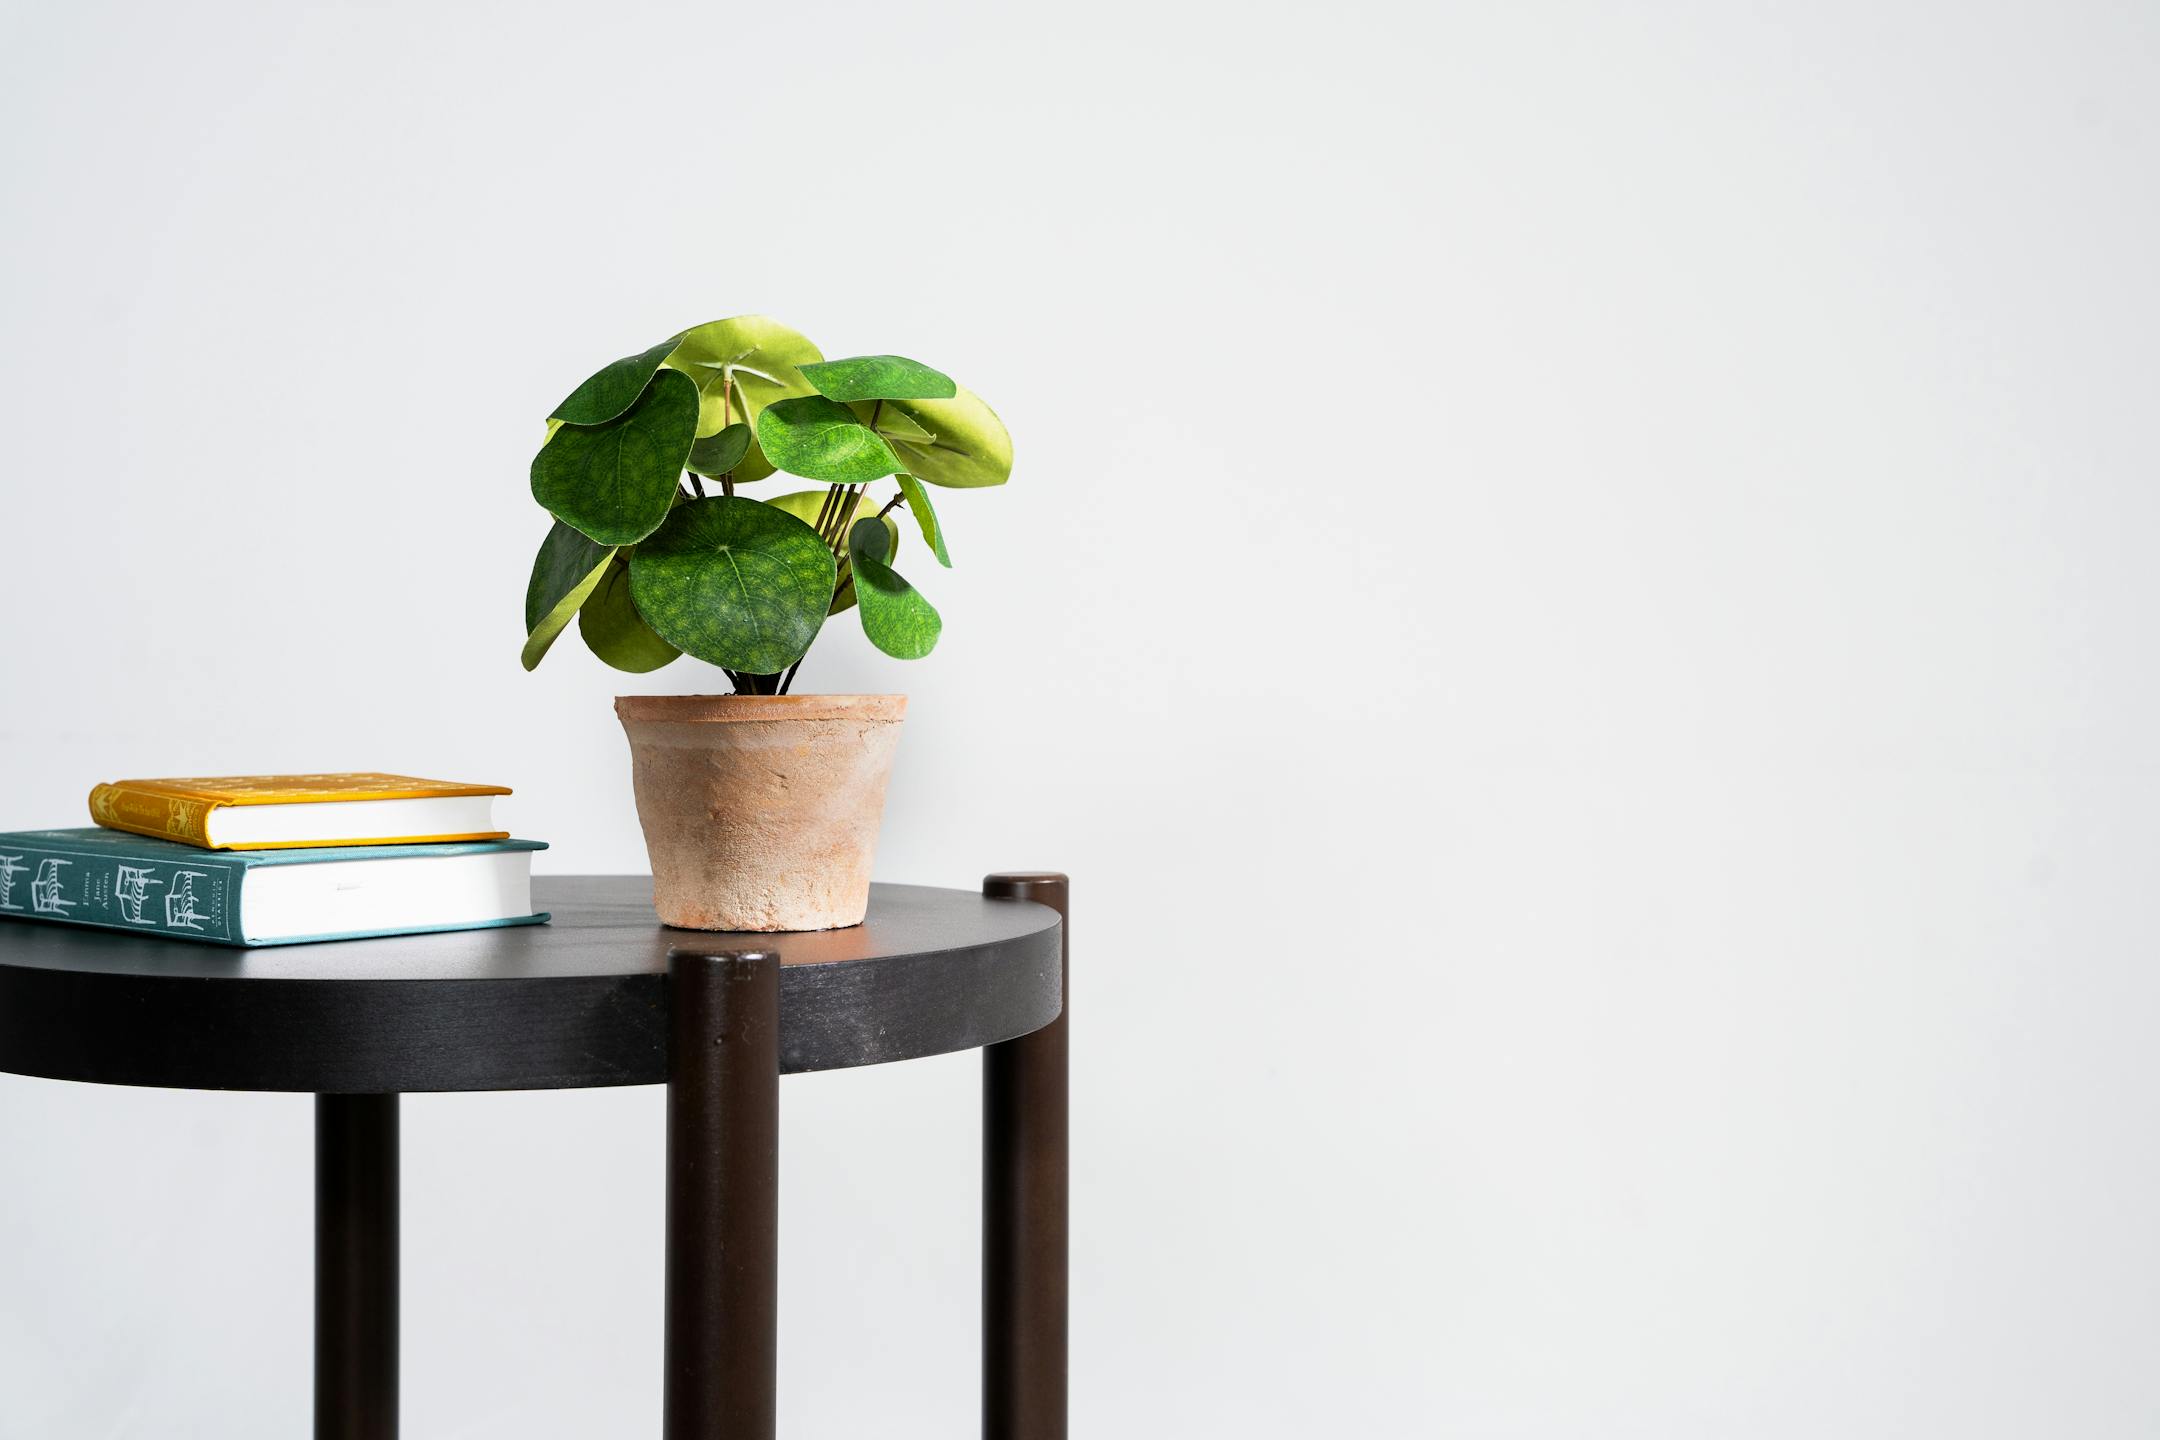 Artificial pilea bush on wooden table